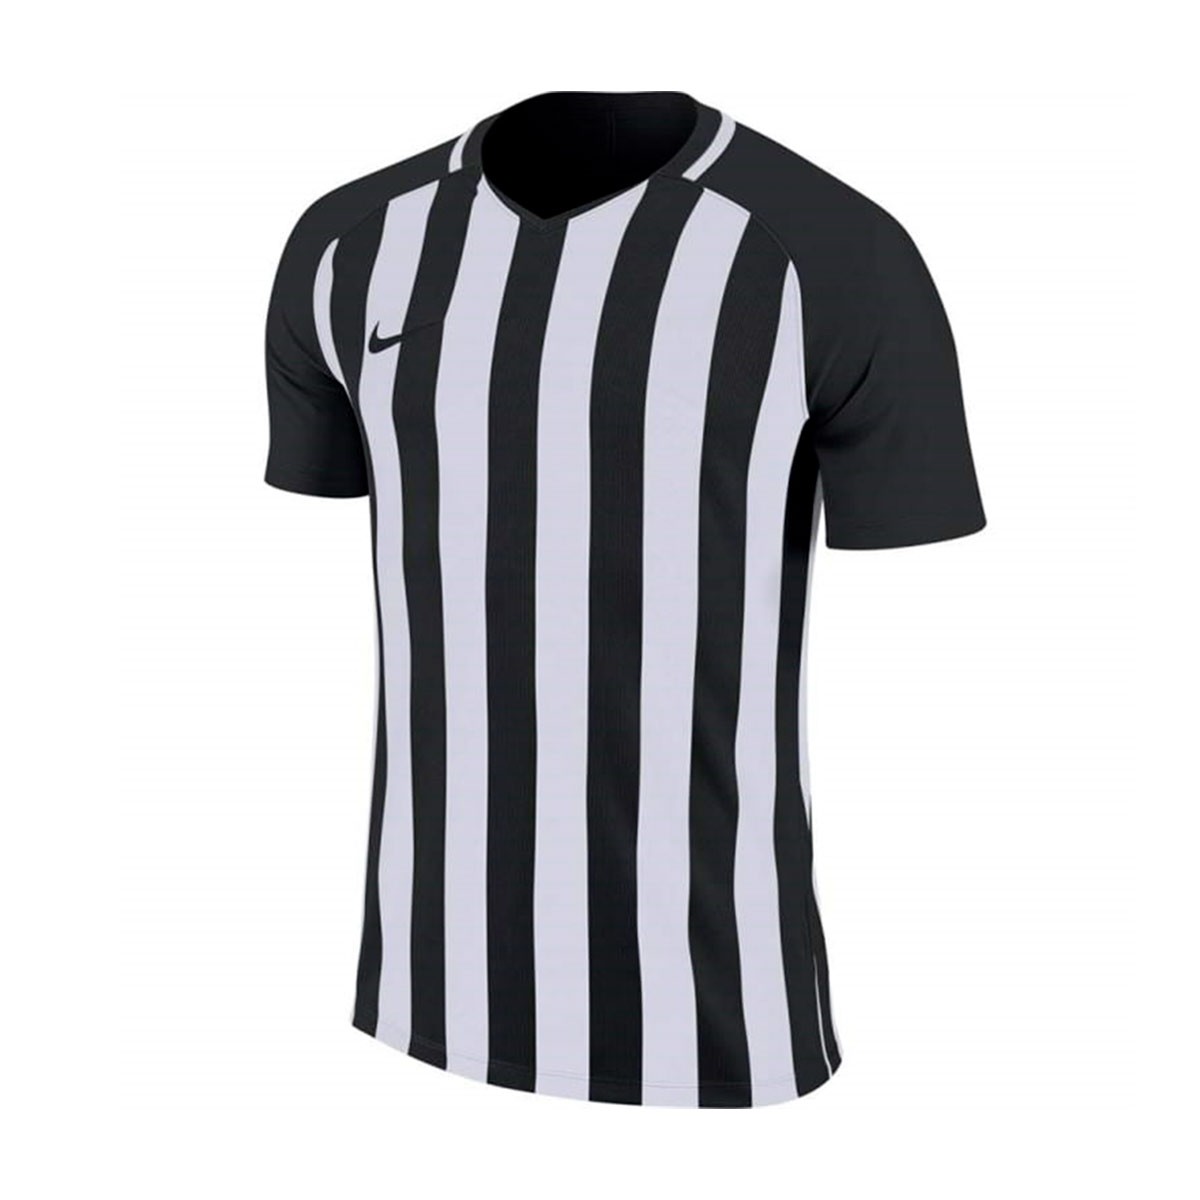 nike striped soccer jersey